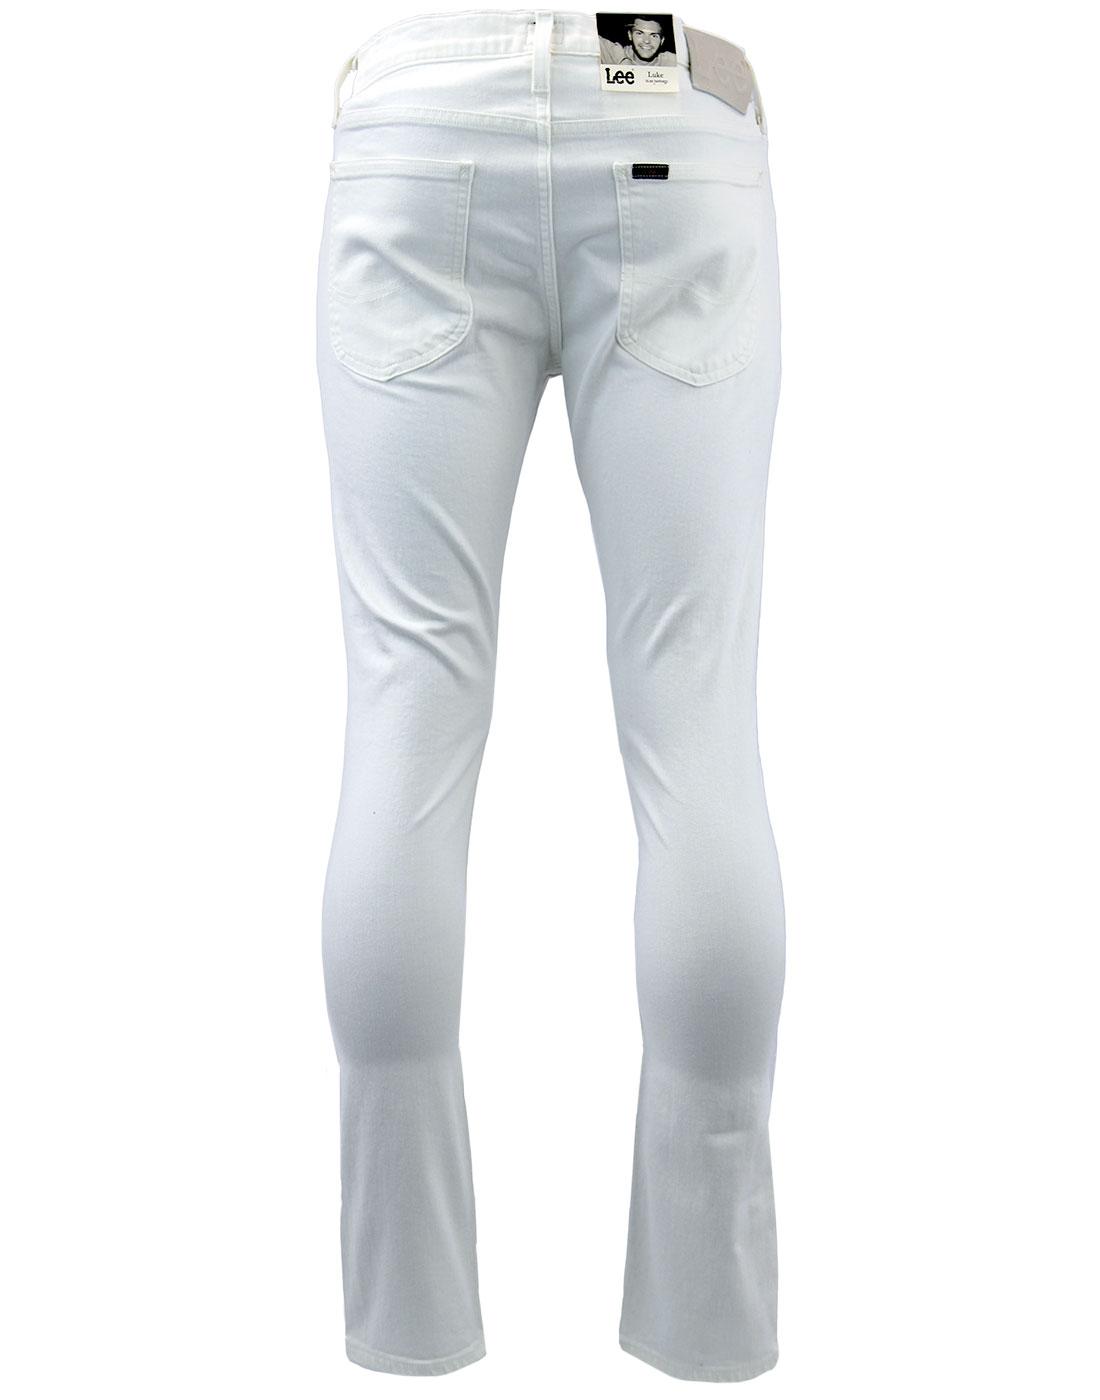 LEE Luke Retro 1960s Mod Slim Tapered White Denim Jeans